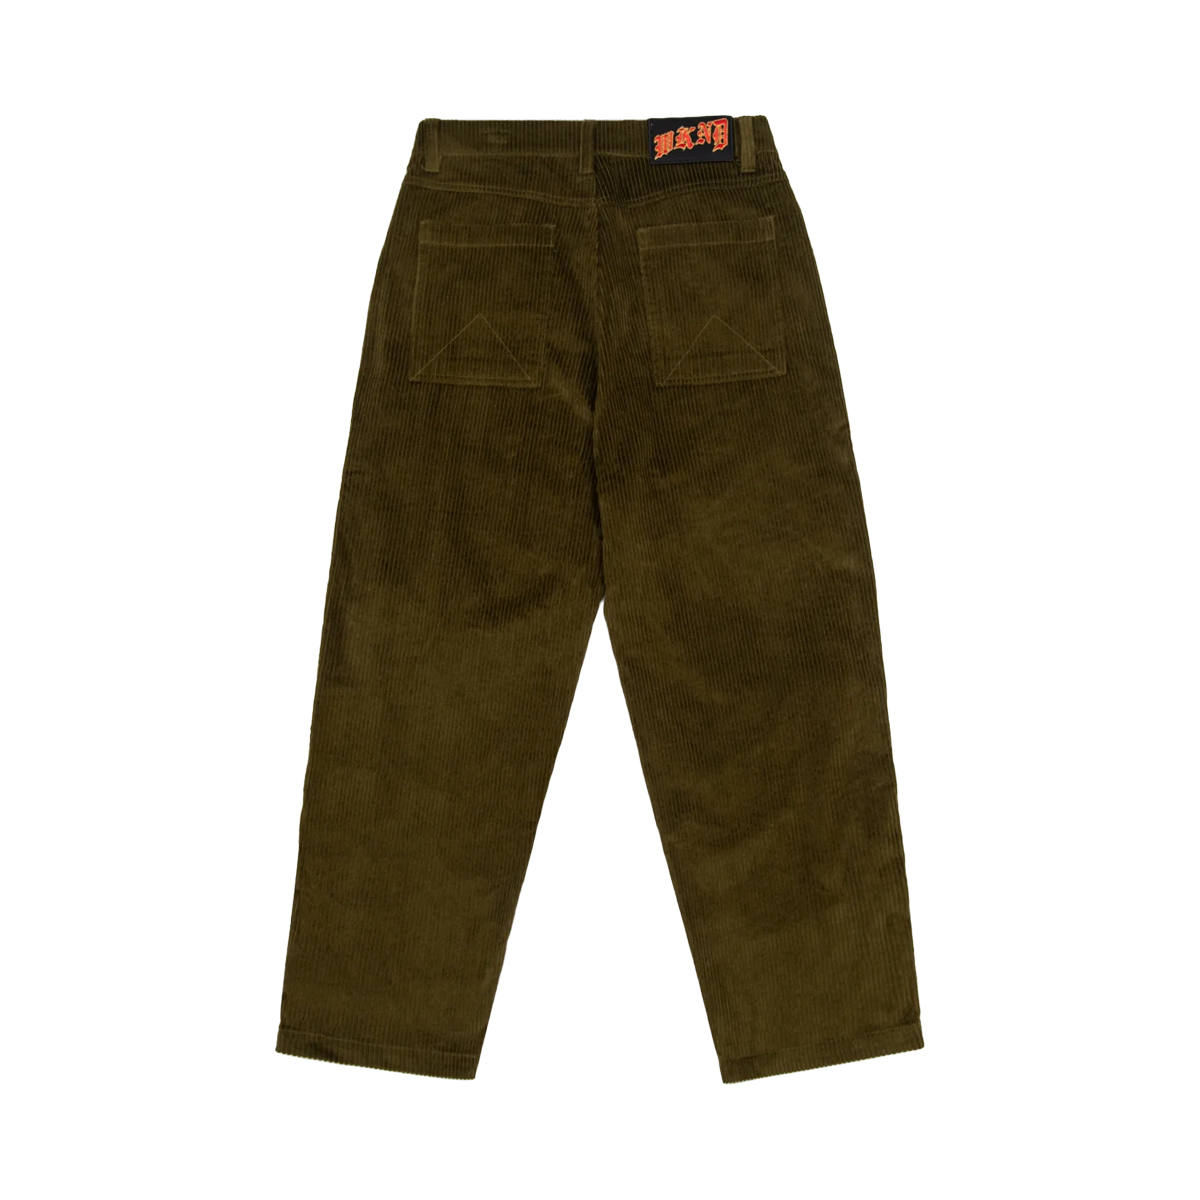 WKND Tubes Pants - Dark Green Corduroy